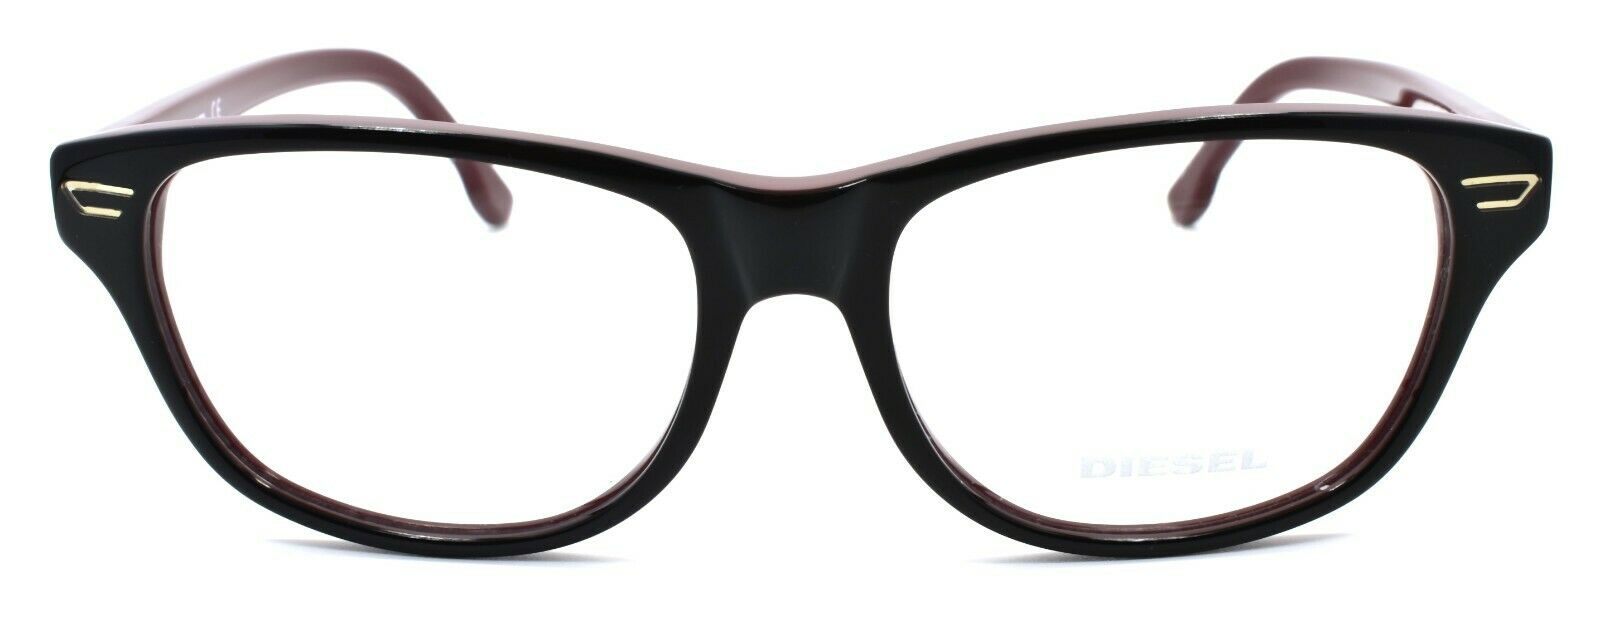 2-Diesel DL5005 020 Unisex Eyeglasses Frames 54-16-145 Shiny Black / Burgundy-664689547623-IKSpecs